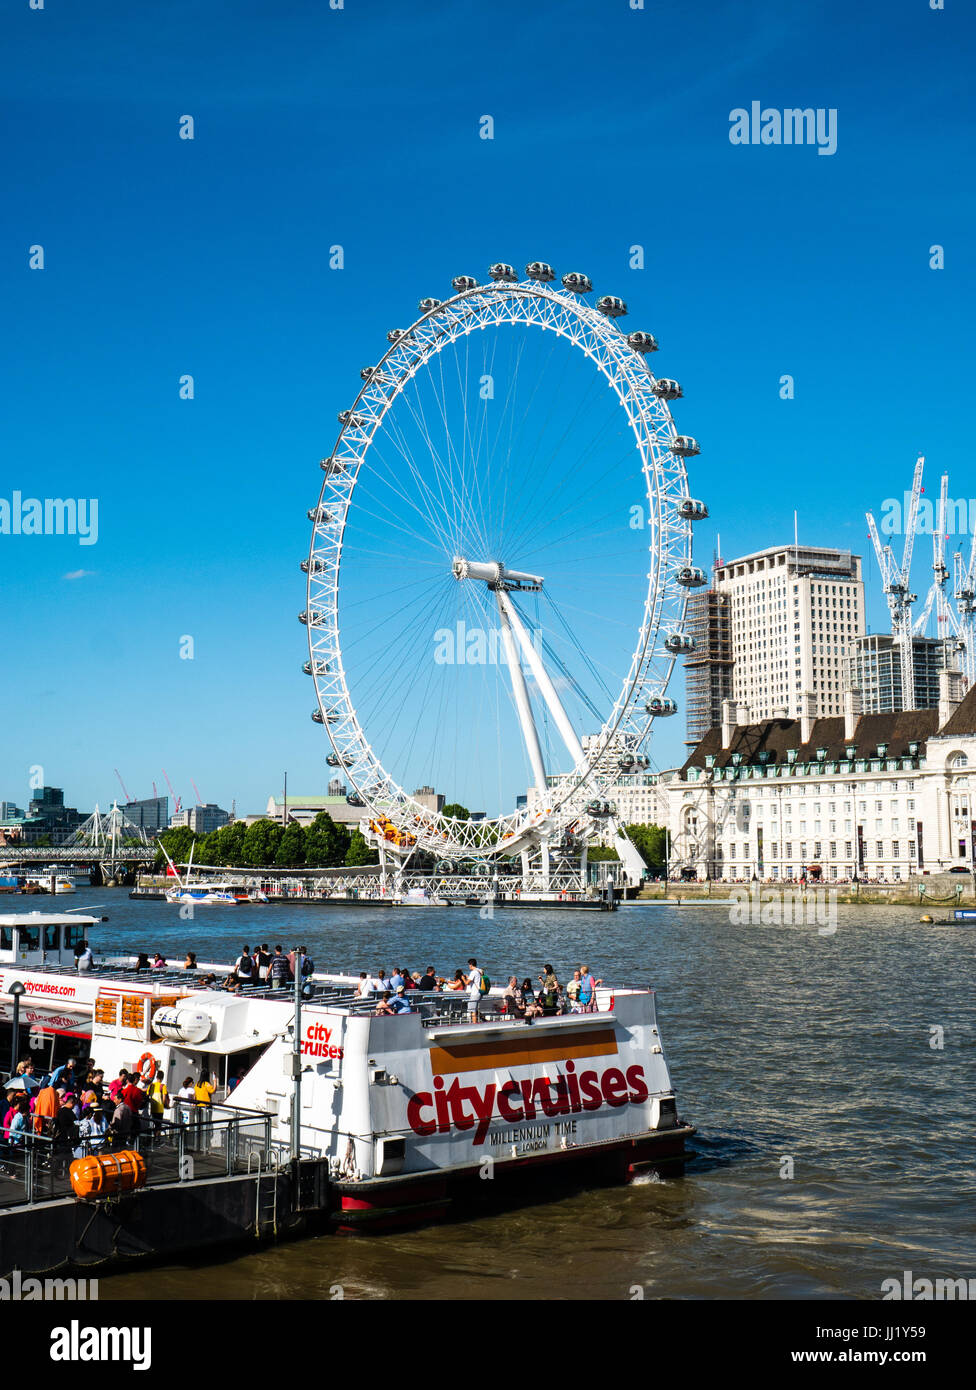 City Cruises, River Thames, Westminster, London, England, UK, GB. Stock Photo